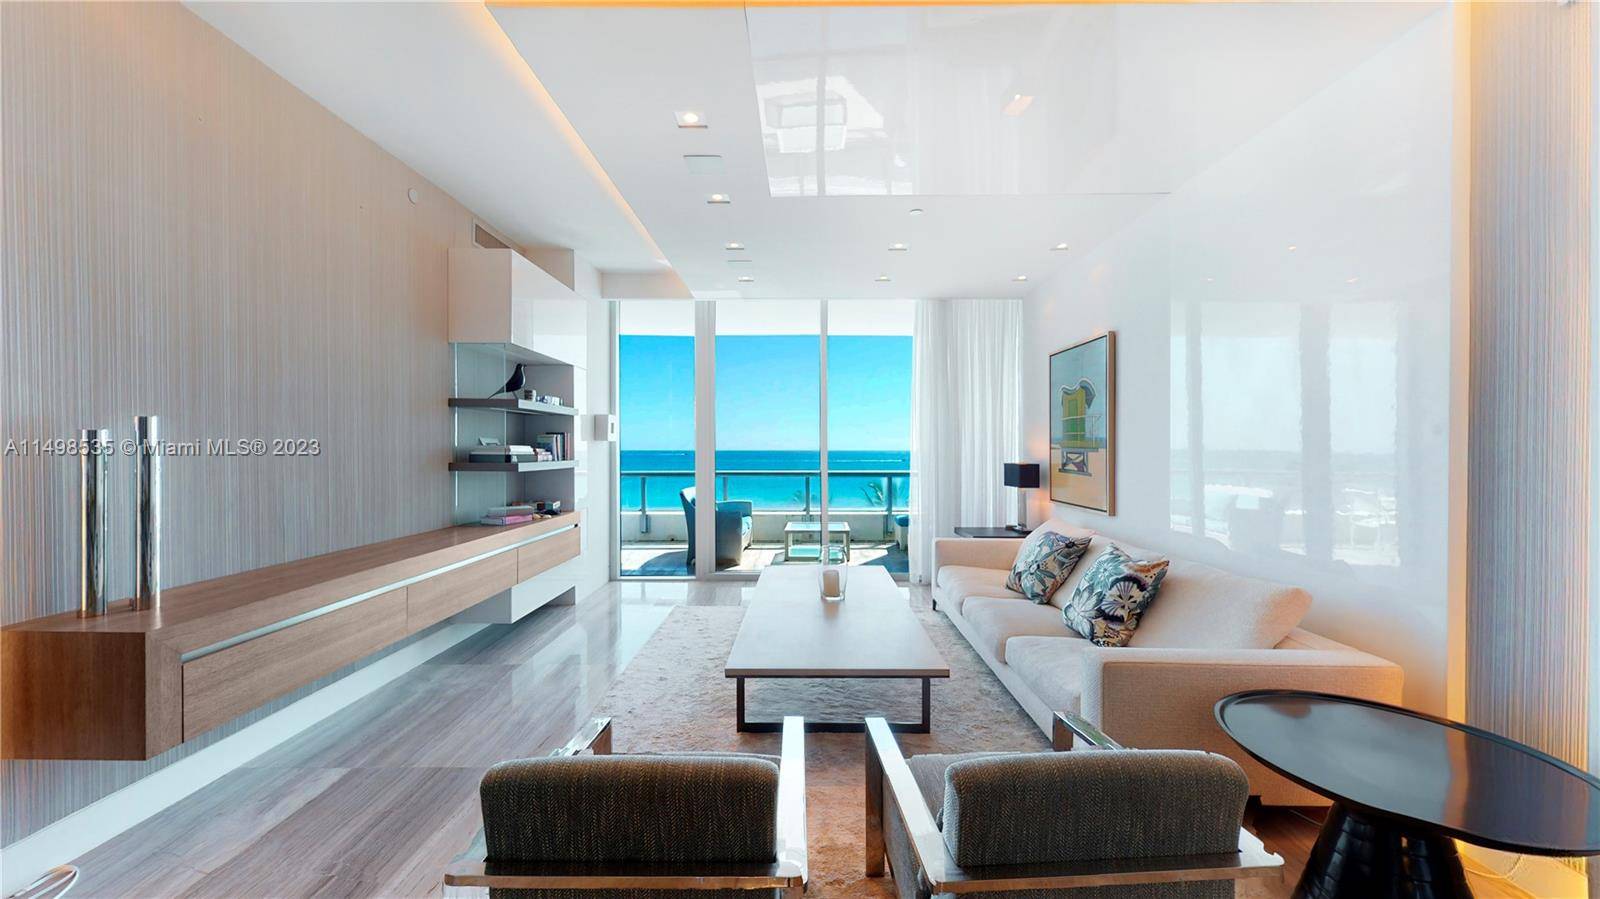 spectacular Beach House direct ocean views 3 bed 3 baths with 11 ceilings.